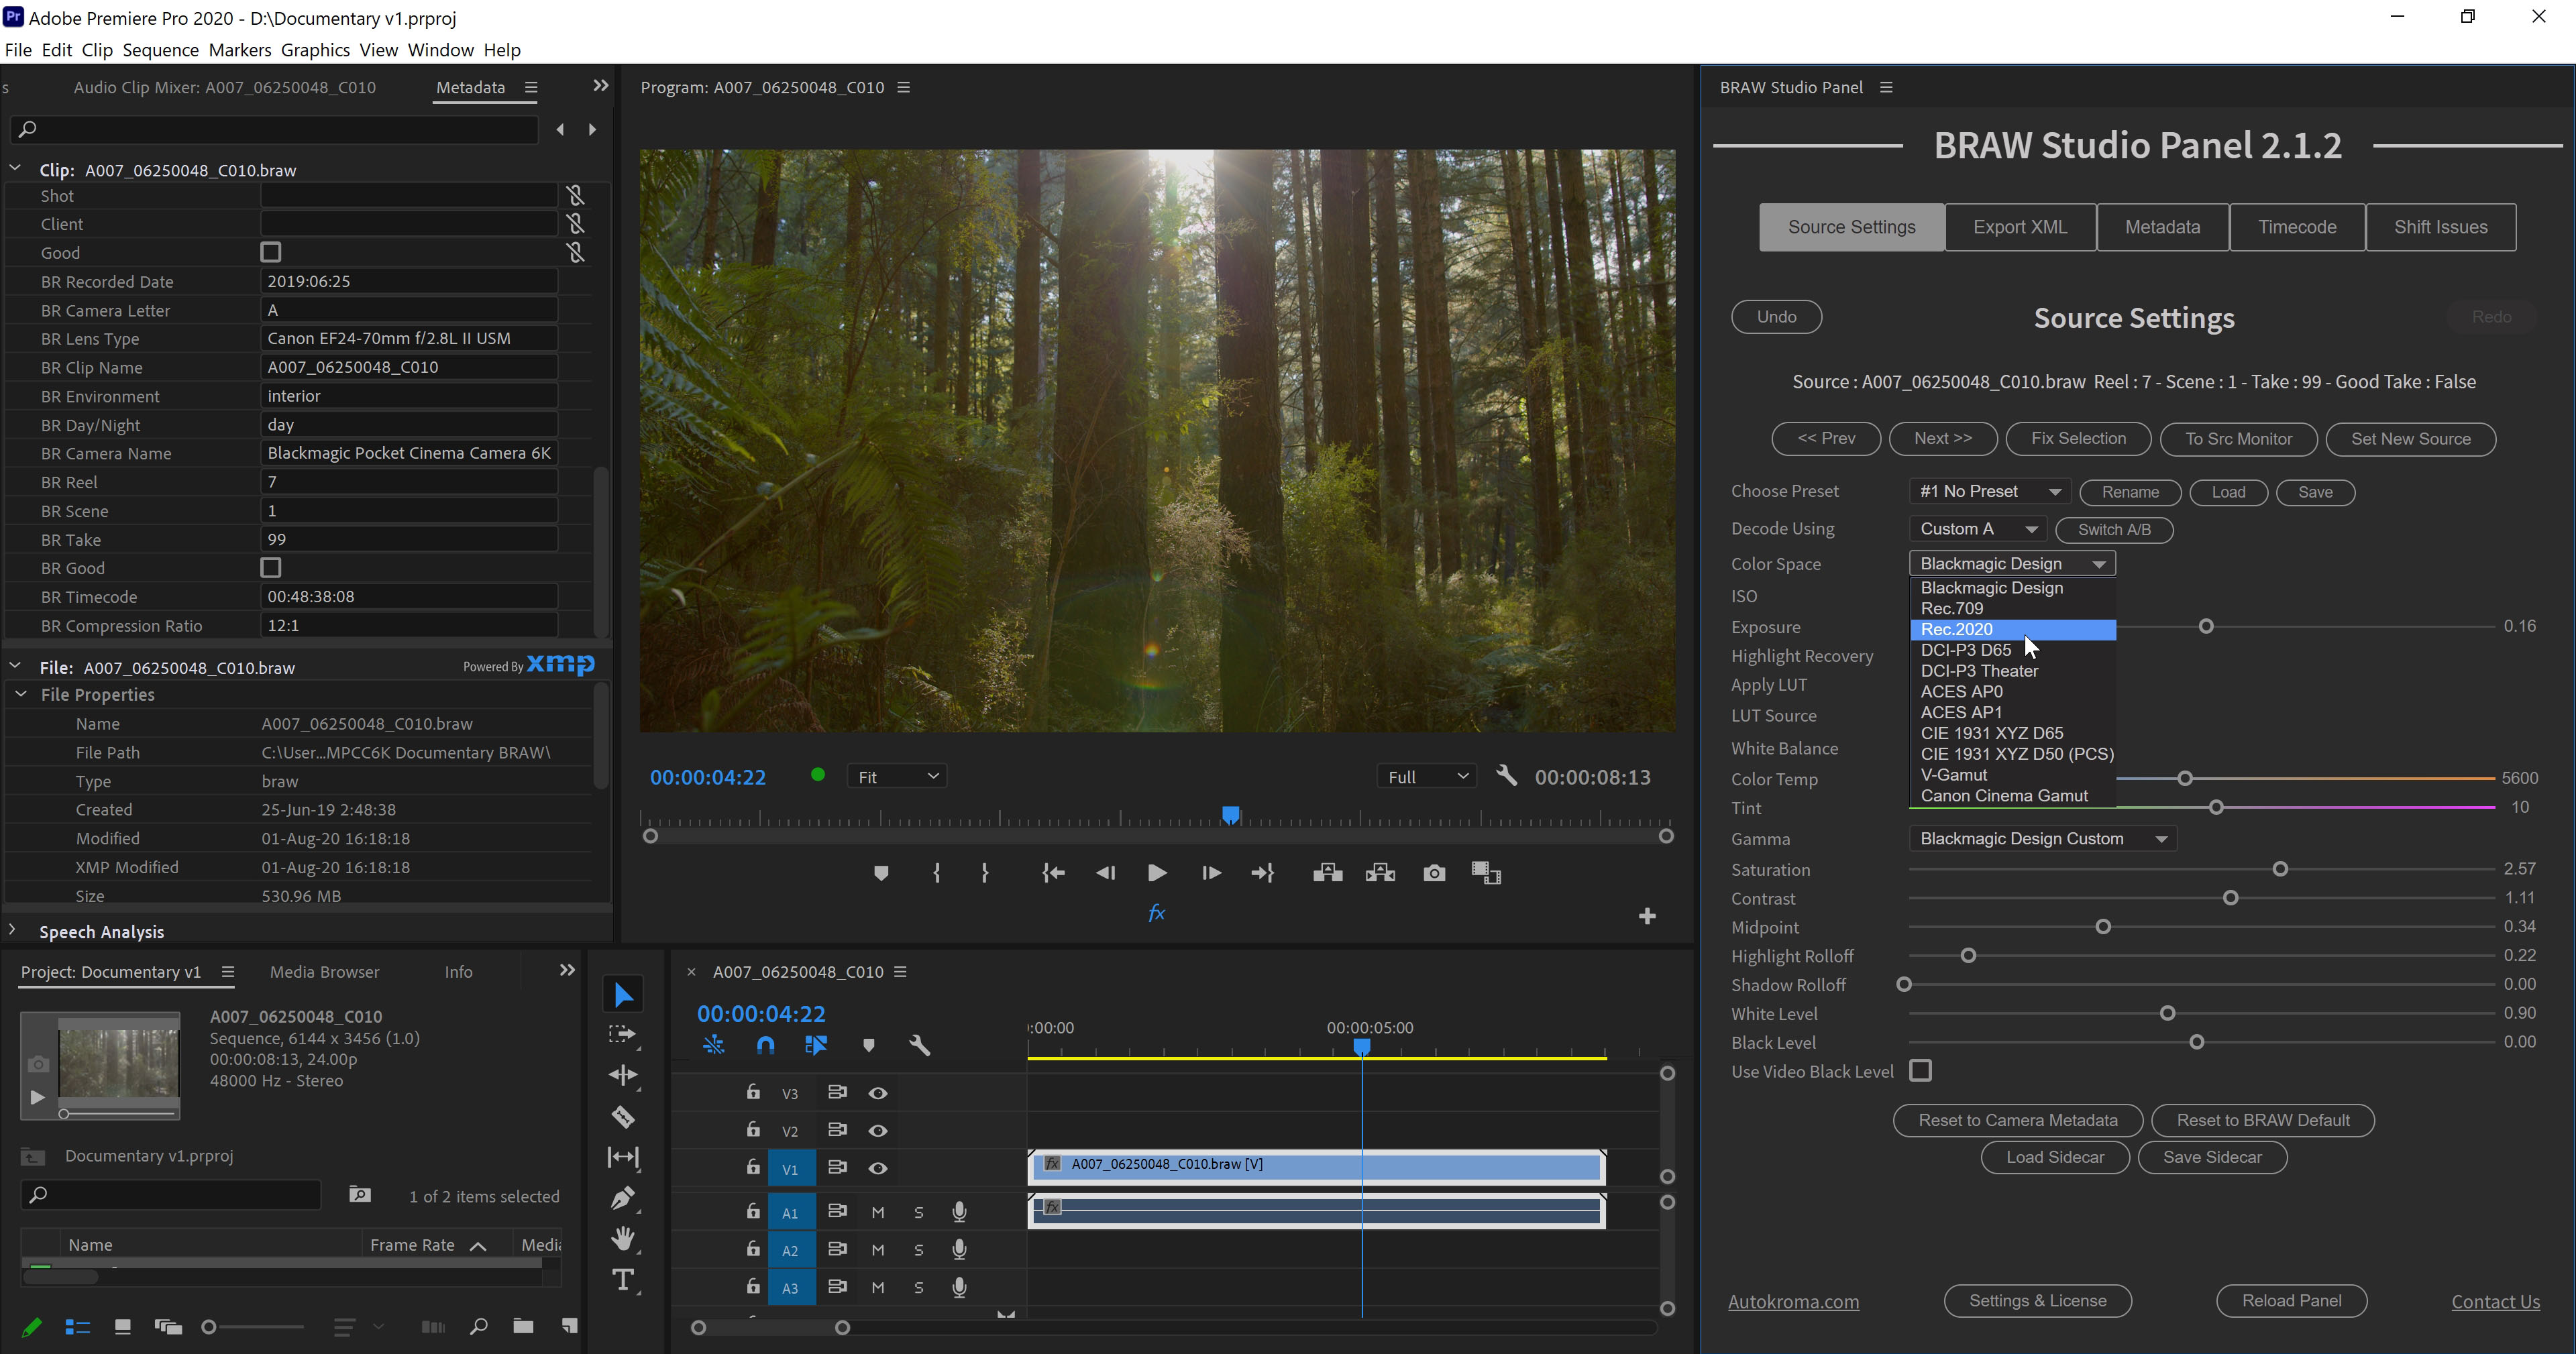 BRAW Studio V2 for Adobe Premiere Pro on Microsoft Windows (Blackmagic RAW importer plugin screenshot) showing the Source Settings Panel